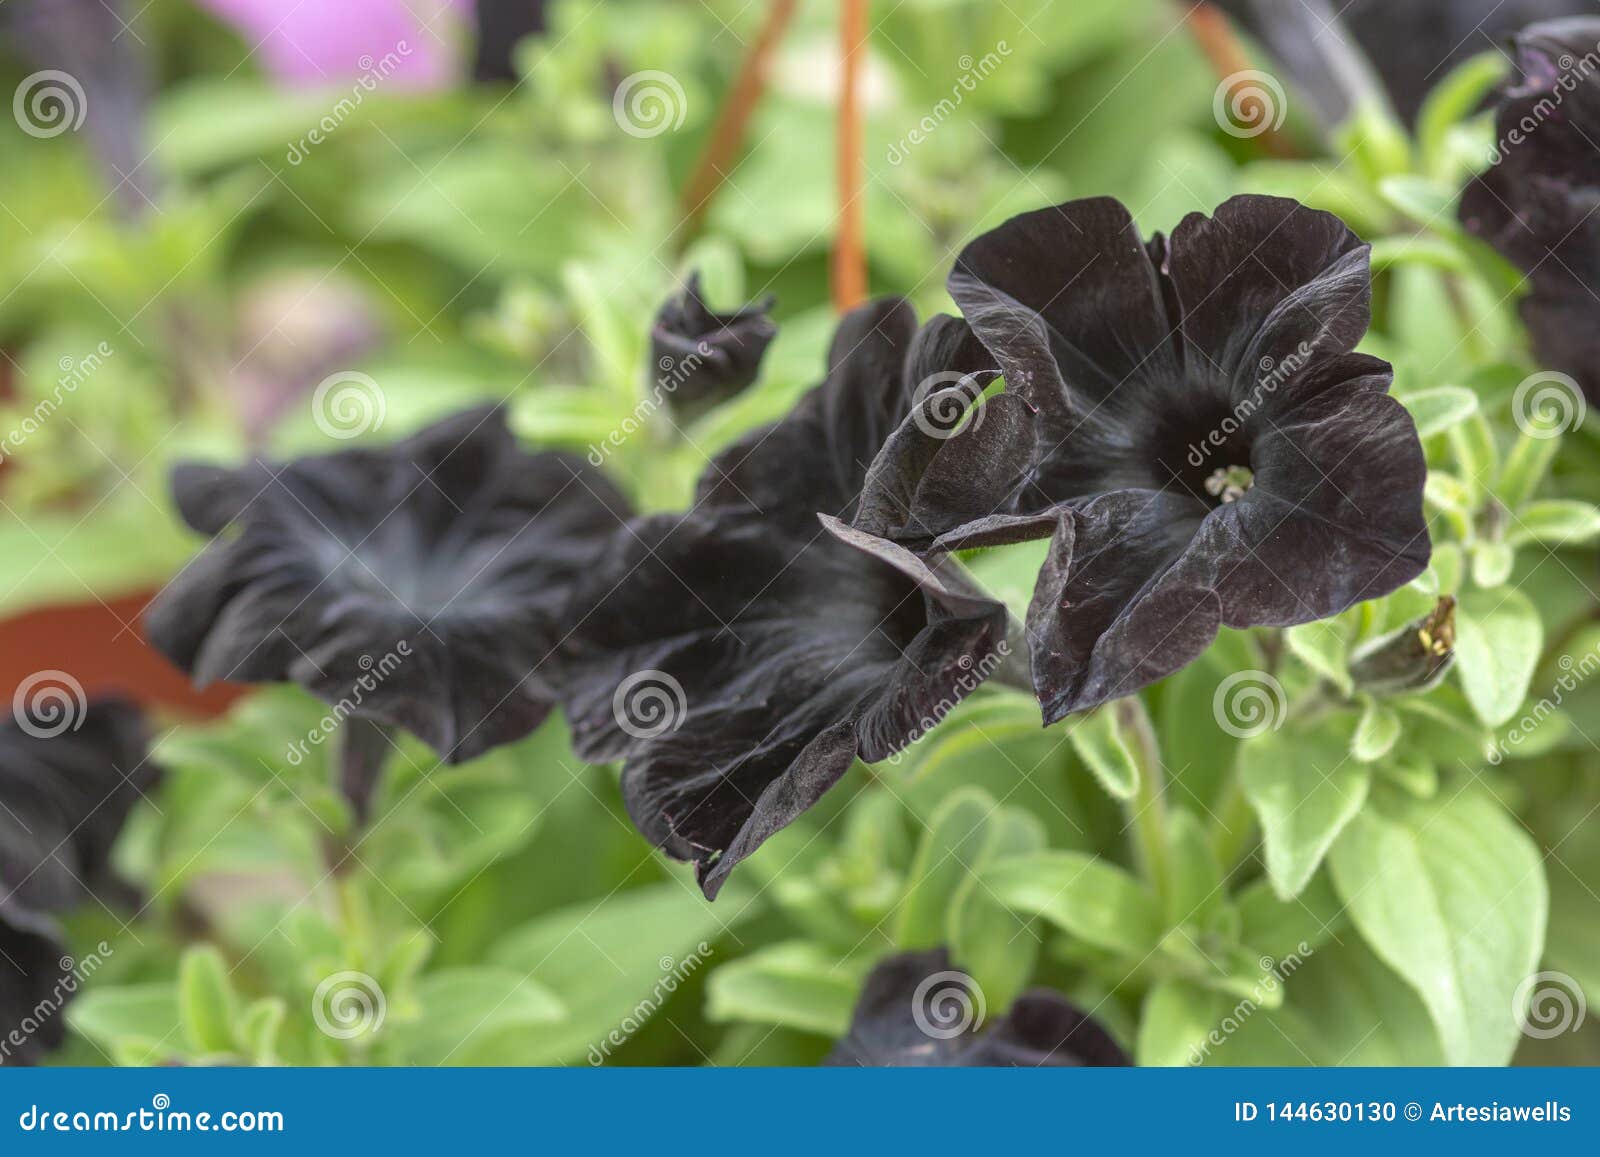 Black Petunia Flowers Stock Photo Image Of Decoration 144630130